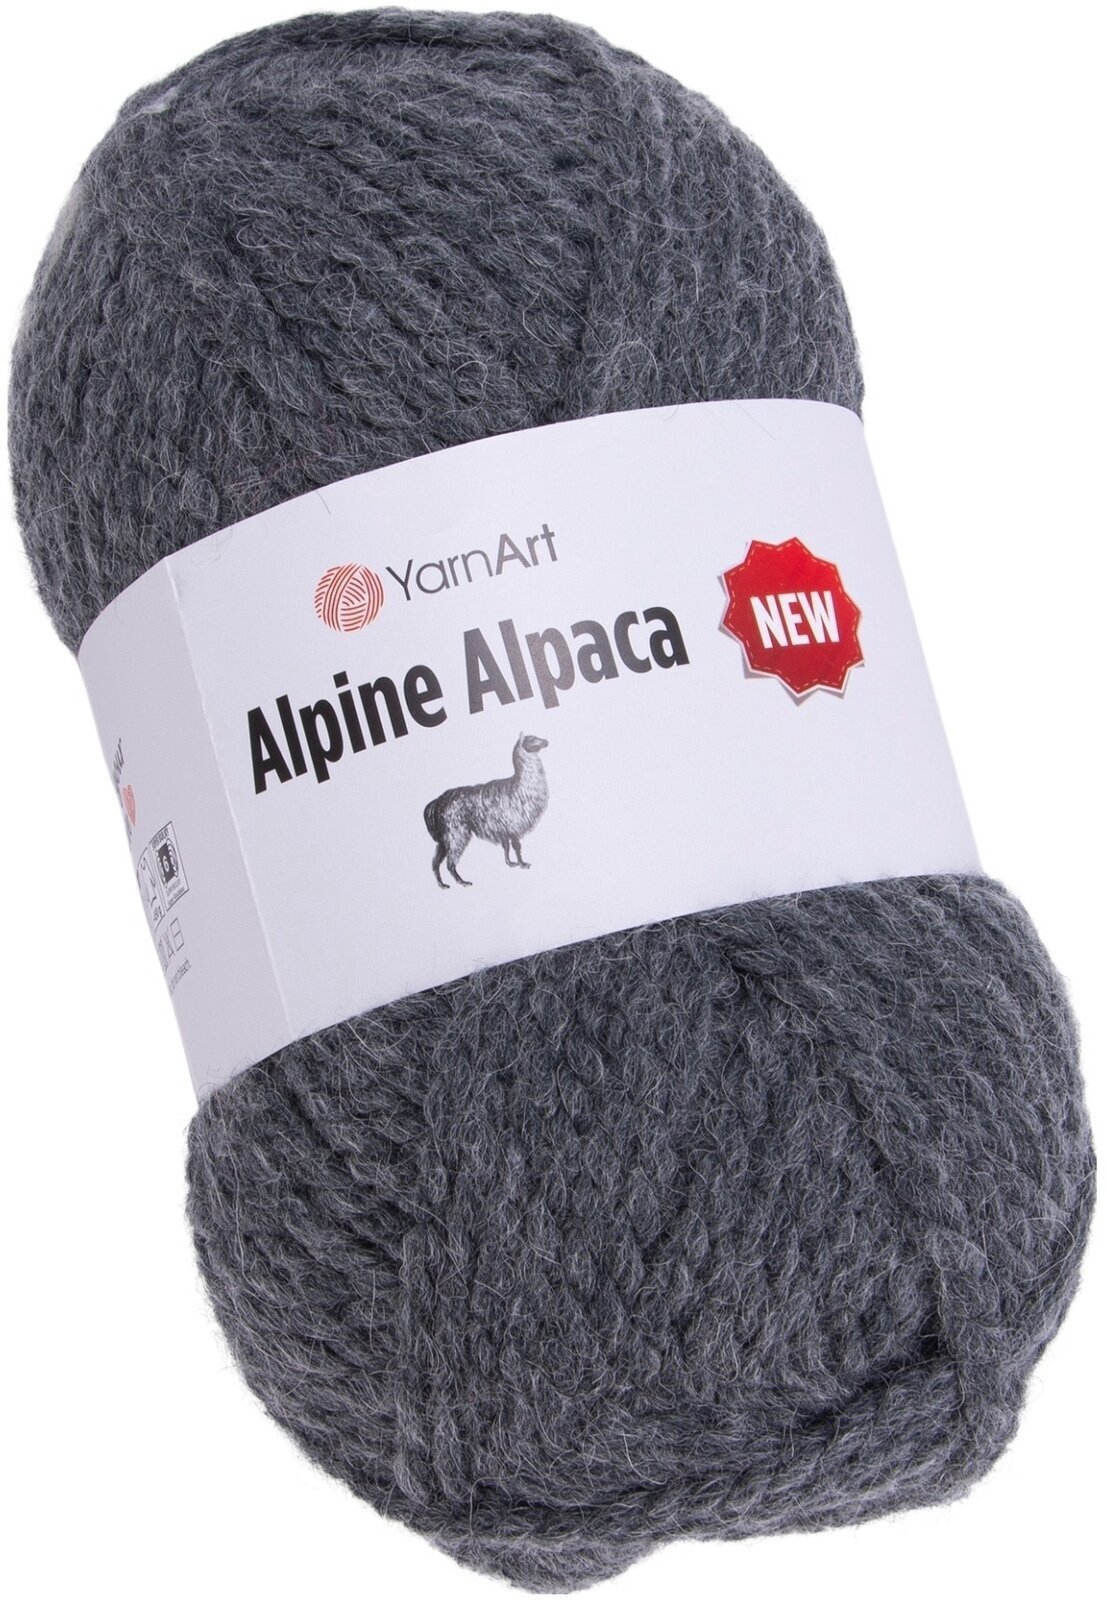 Strickgarn Yarn Art Alpine Alpaca 1436